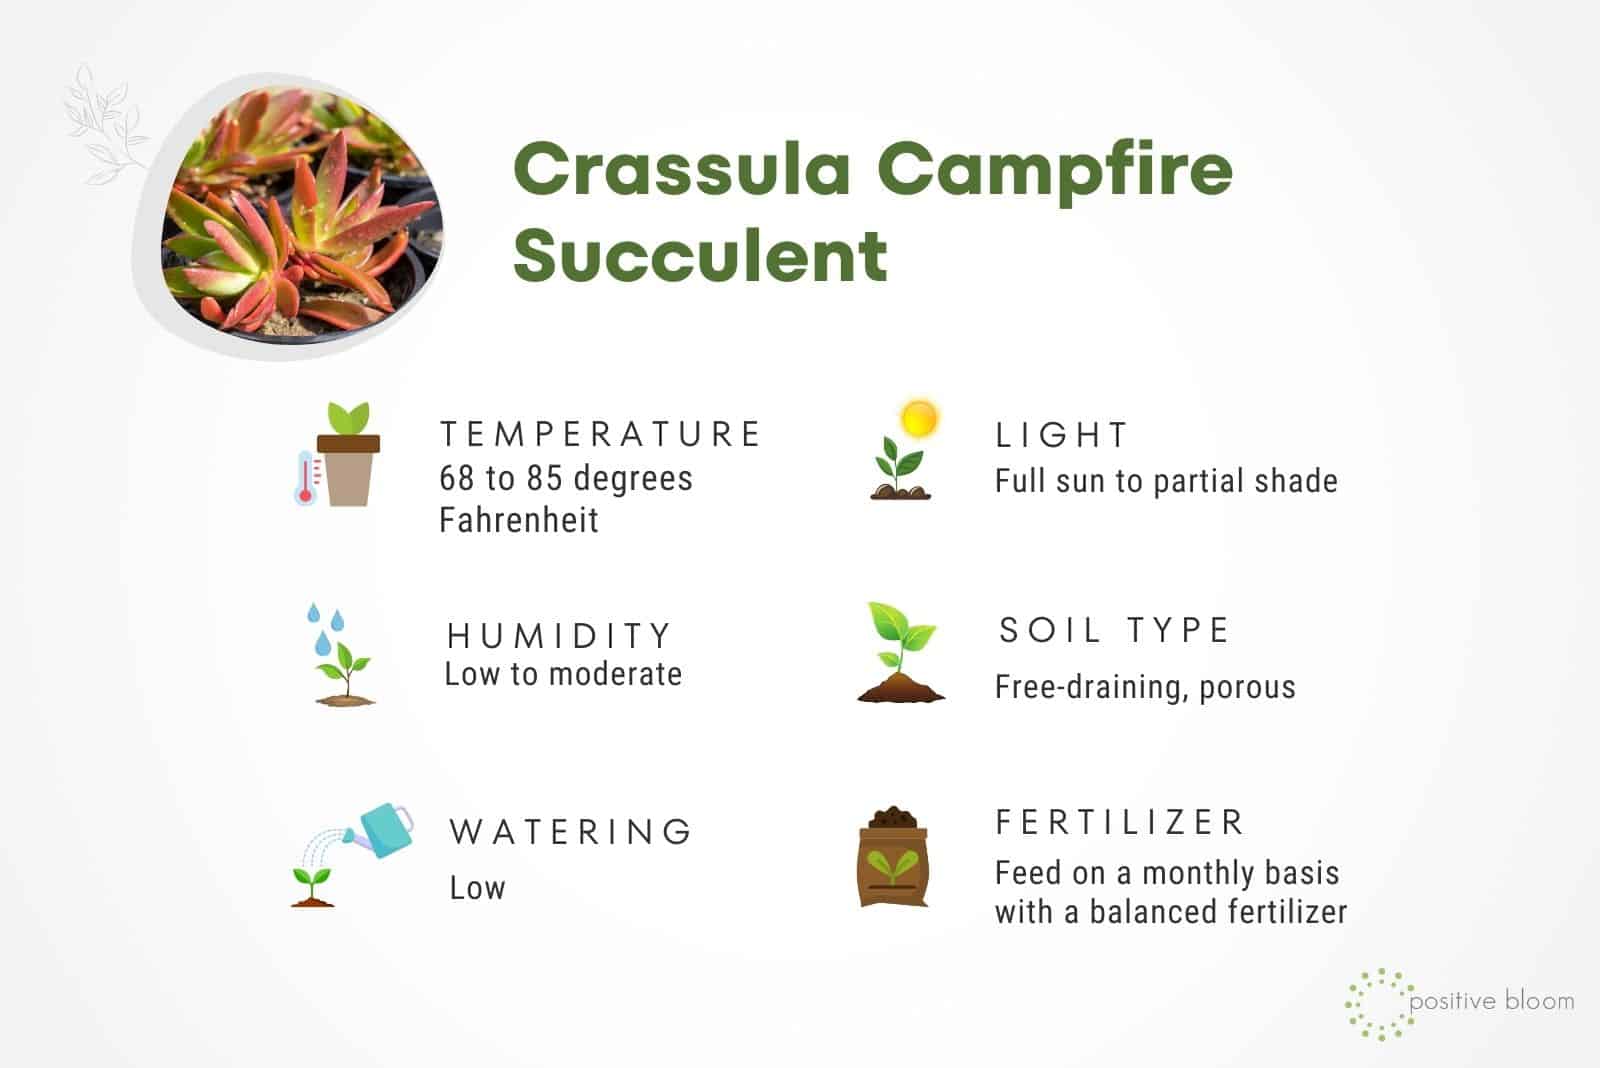 Campfire Succulent facts